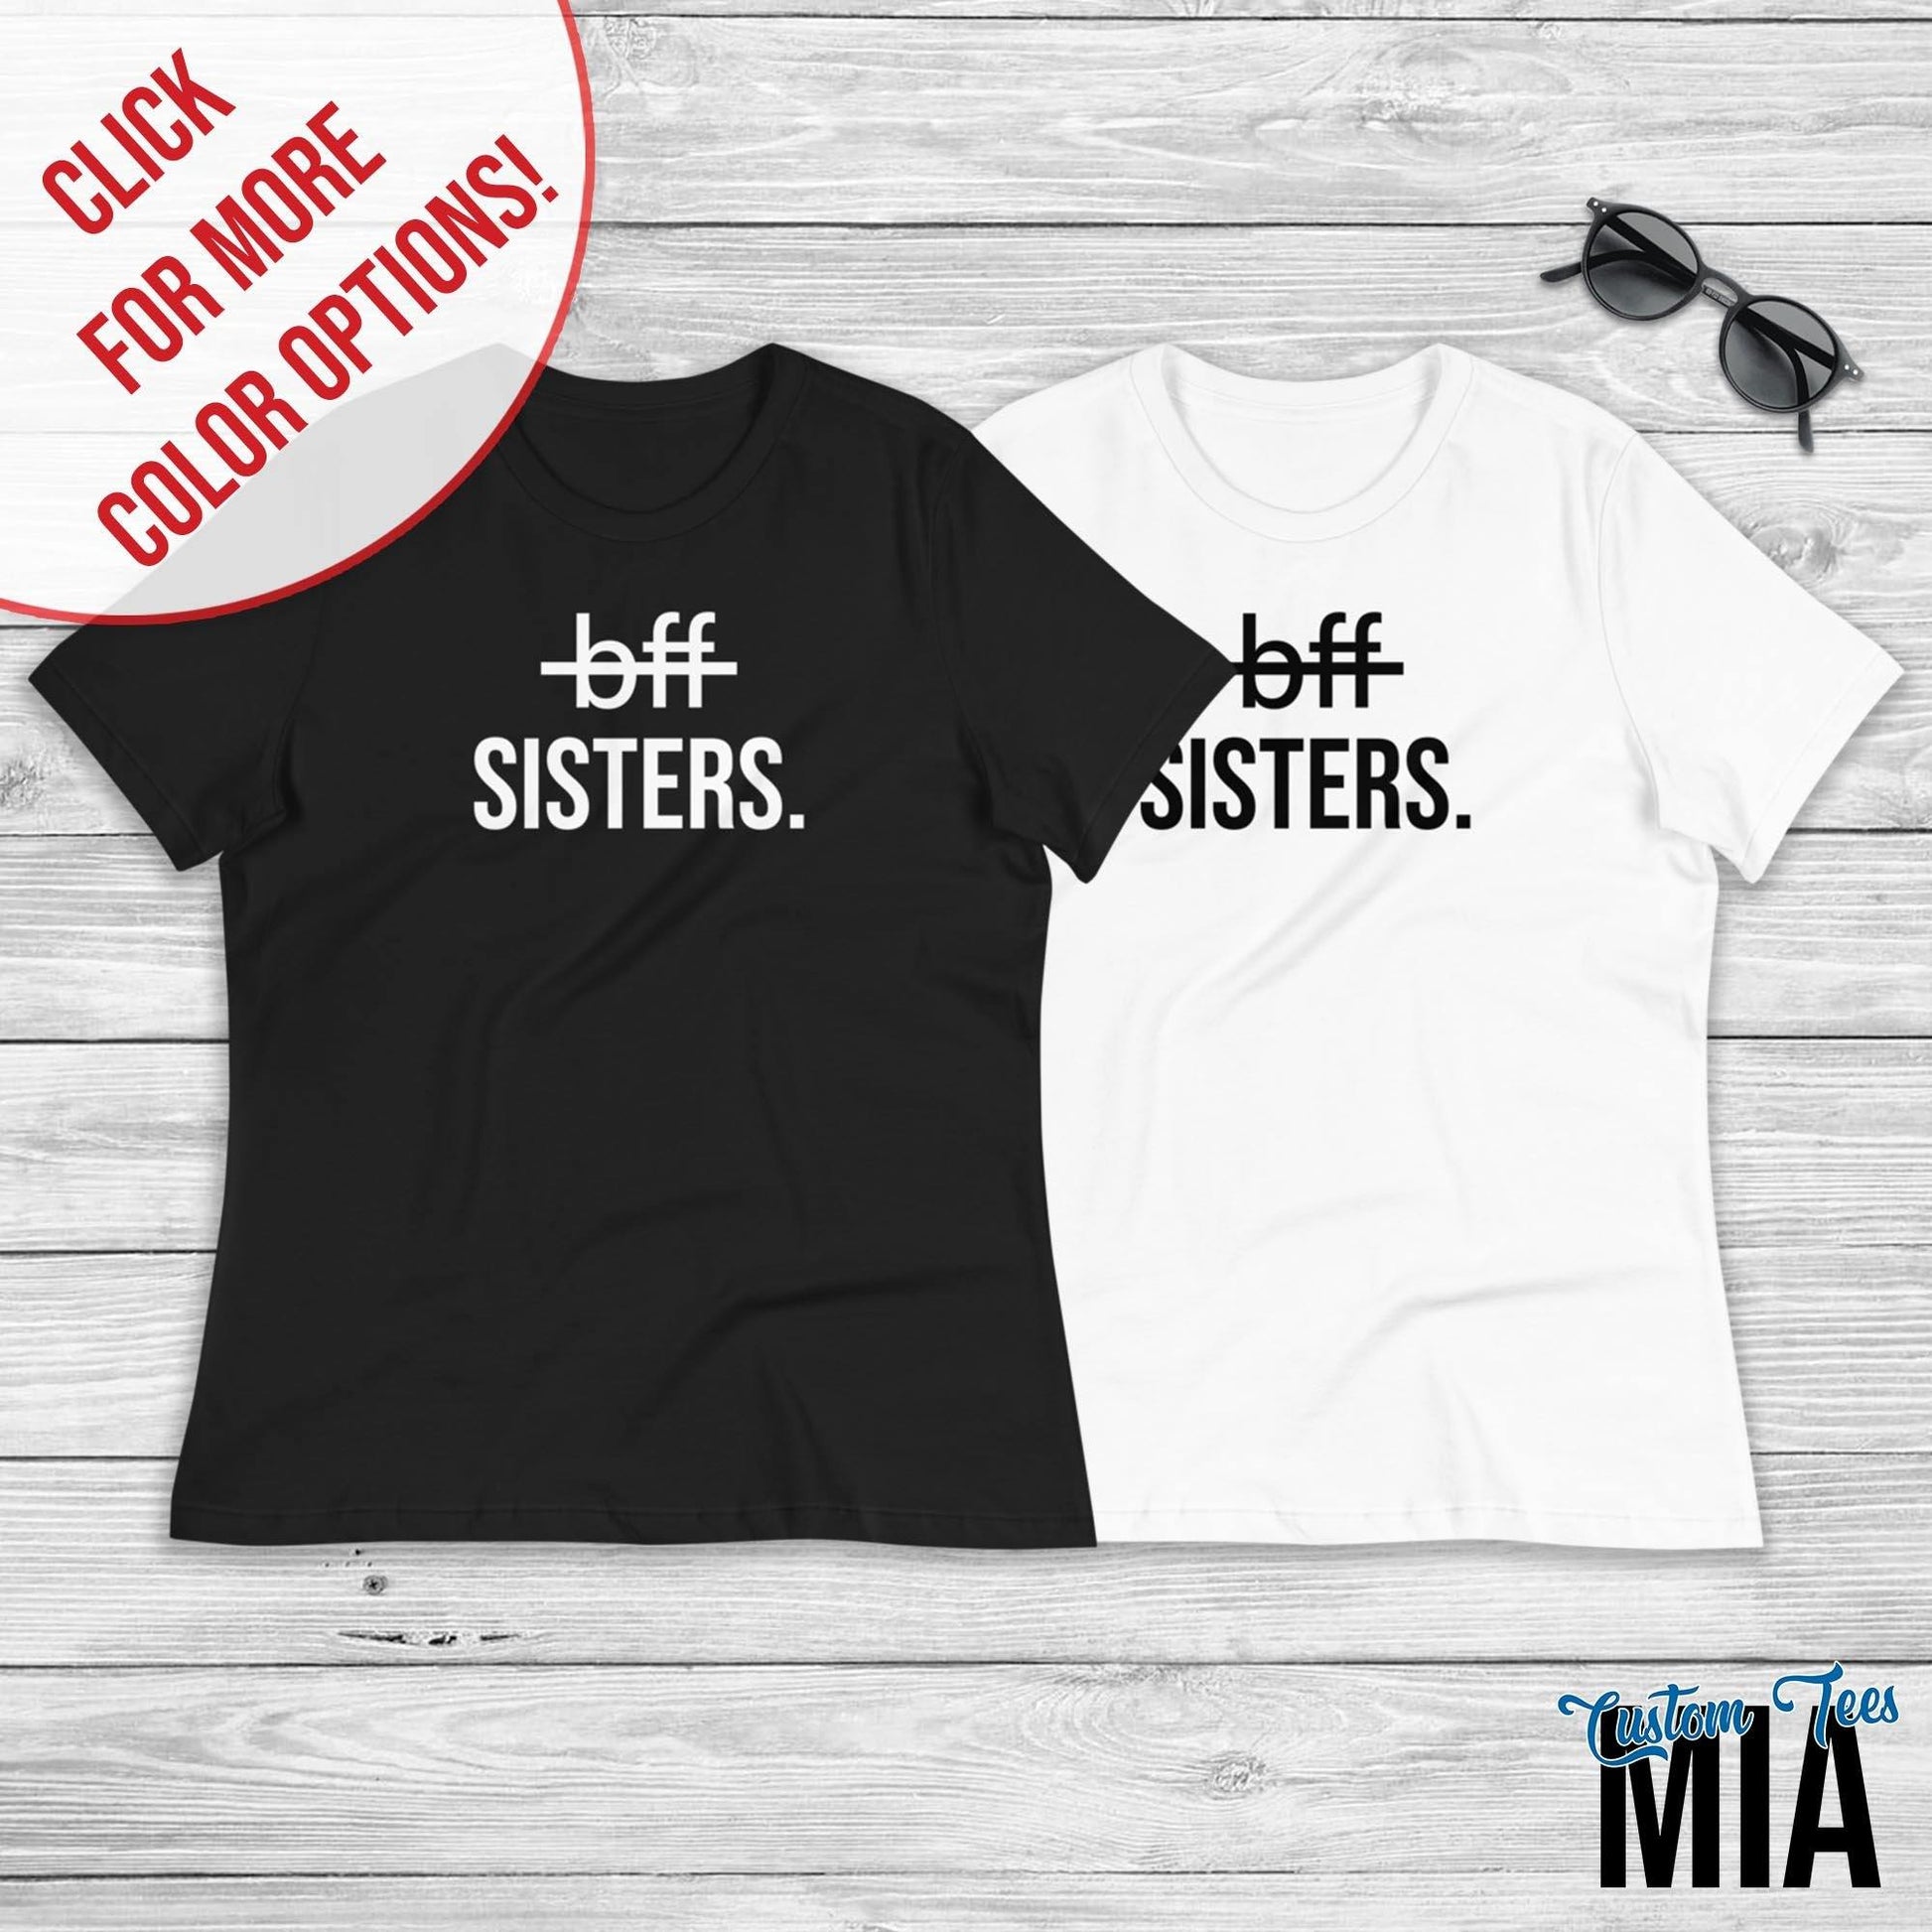 BFF Sisters Matching Shirts - Custom Tees MIA